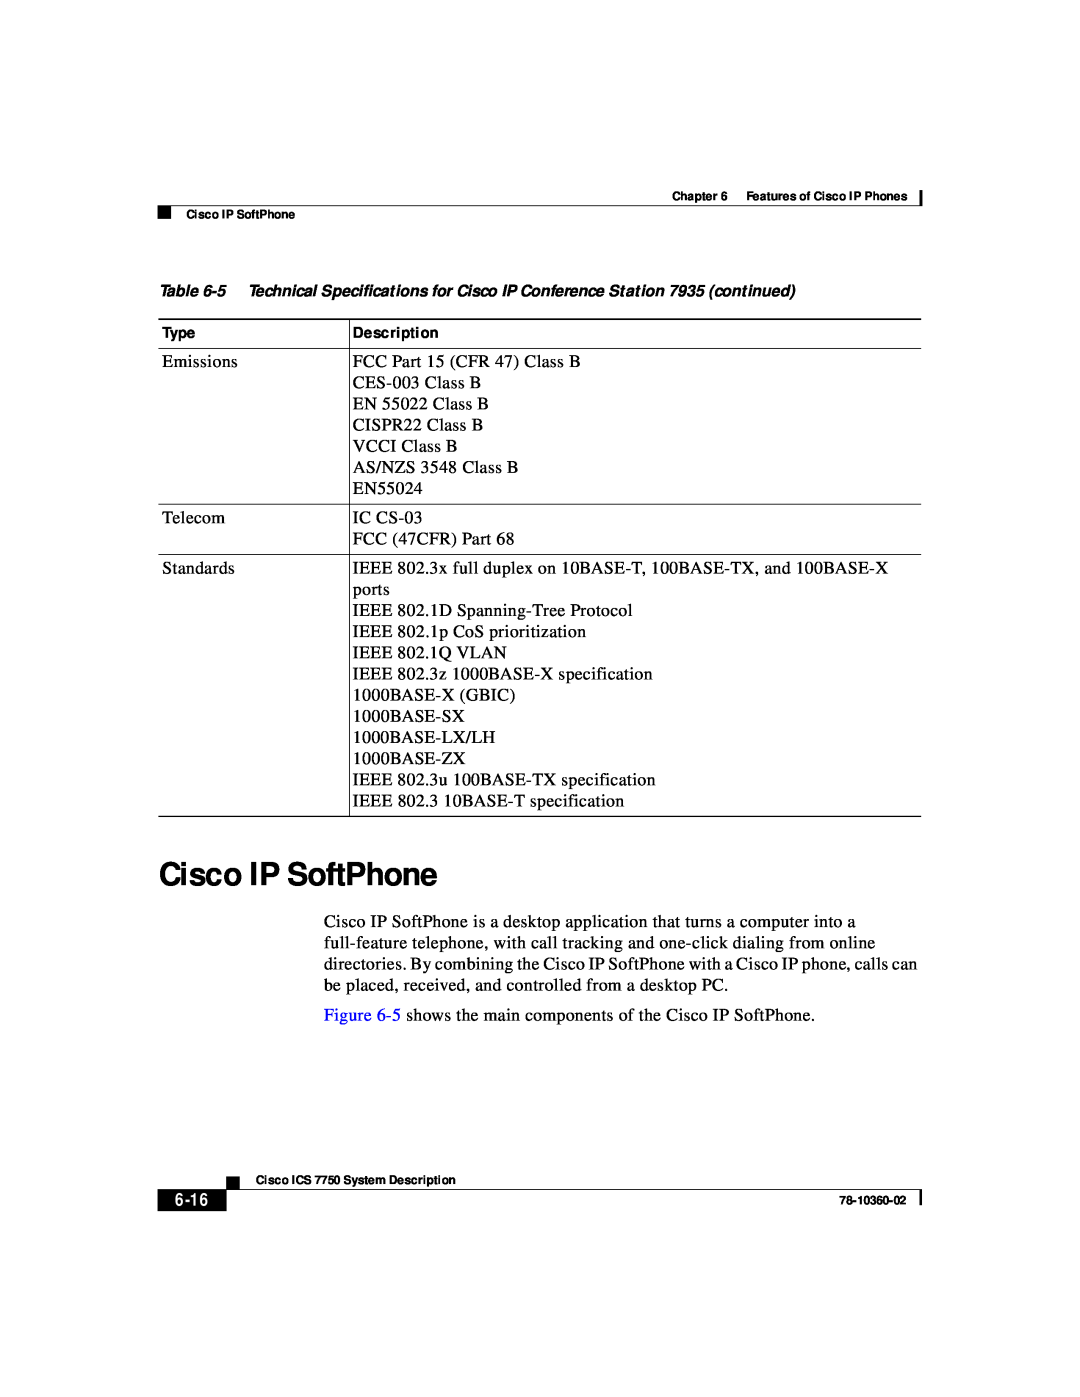 Cisco Systems ICS-7750 manual Cisco IP SoftPhone, 6-16 